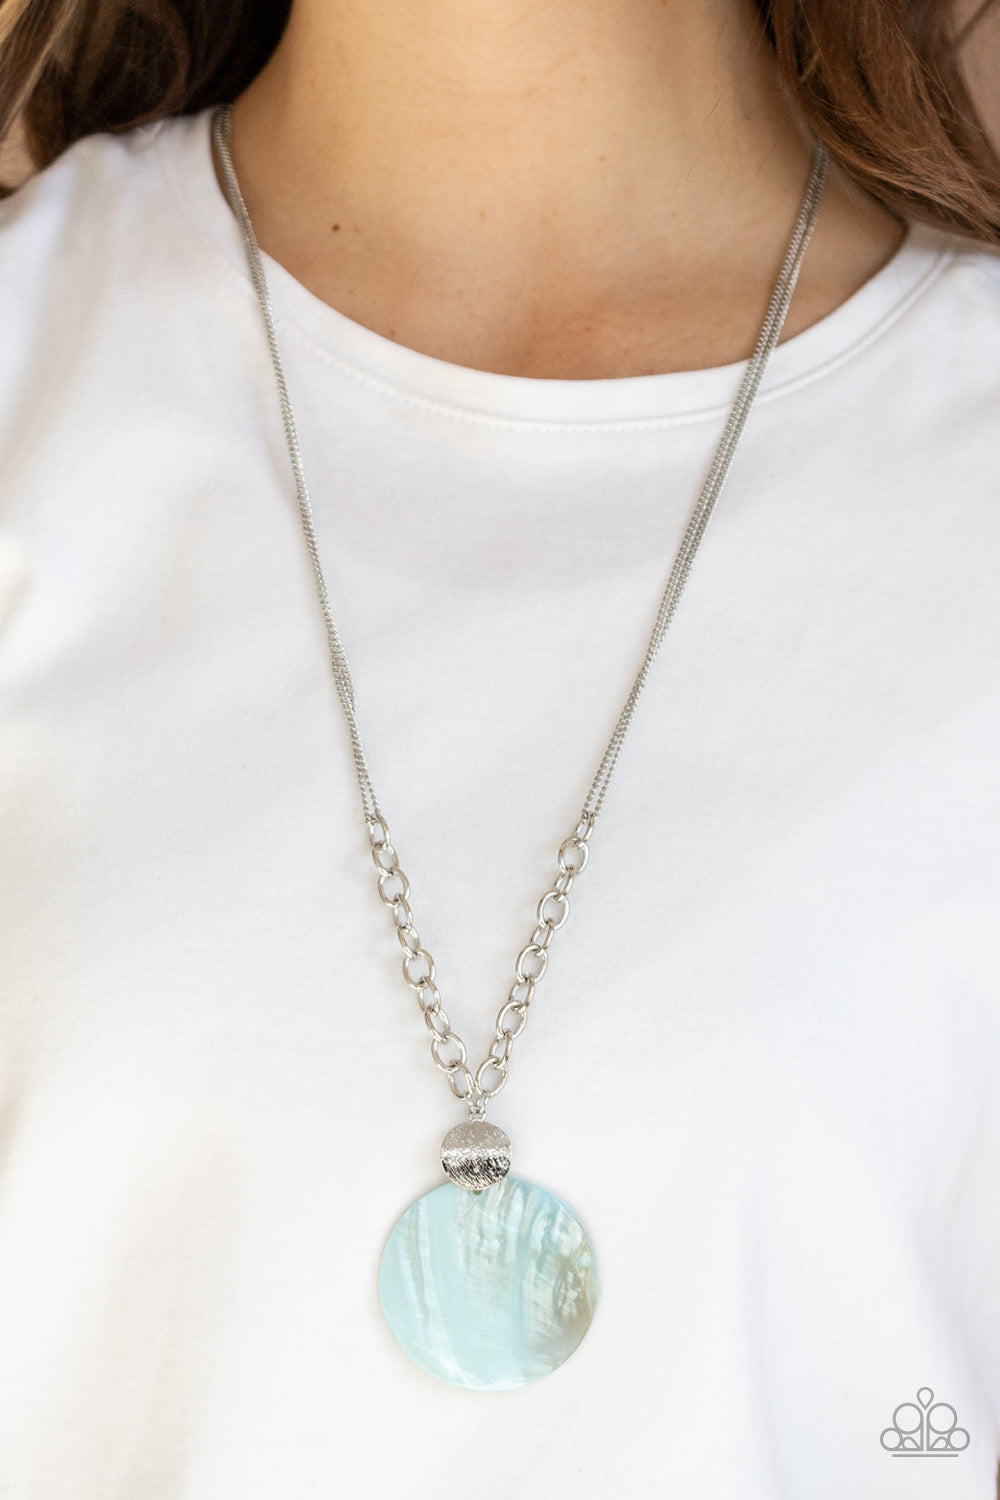 A Top-SHELLer Necklace - Blue